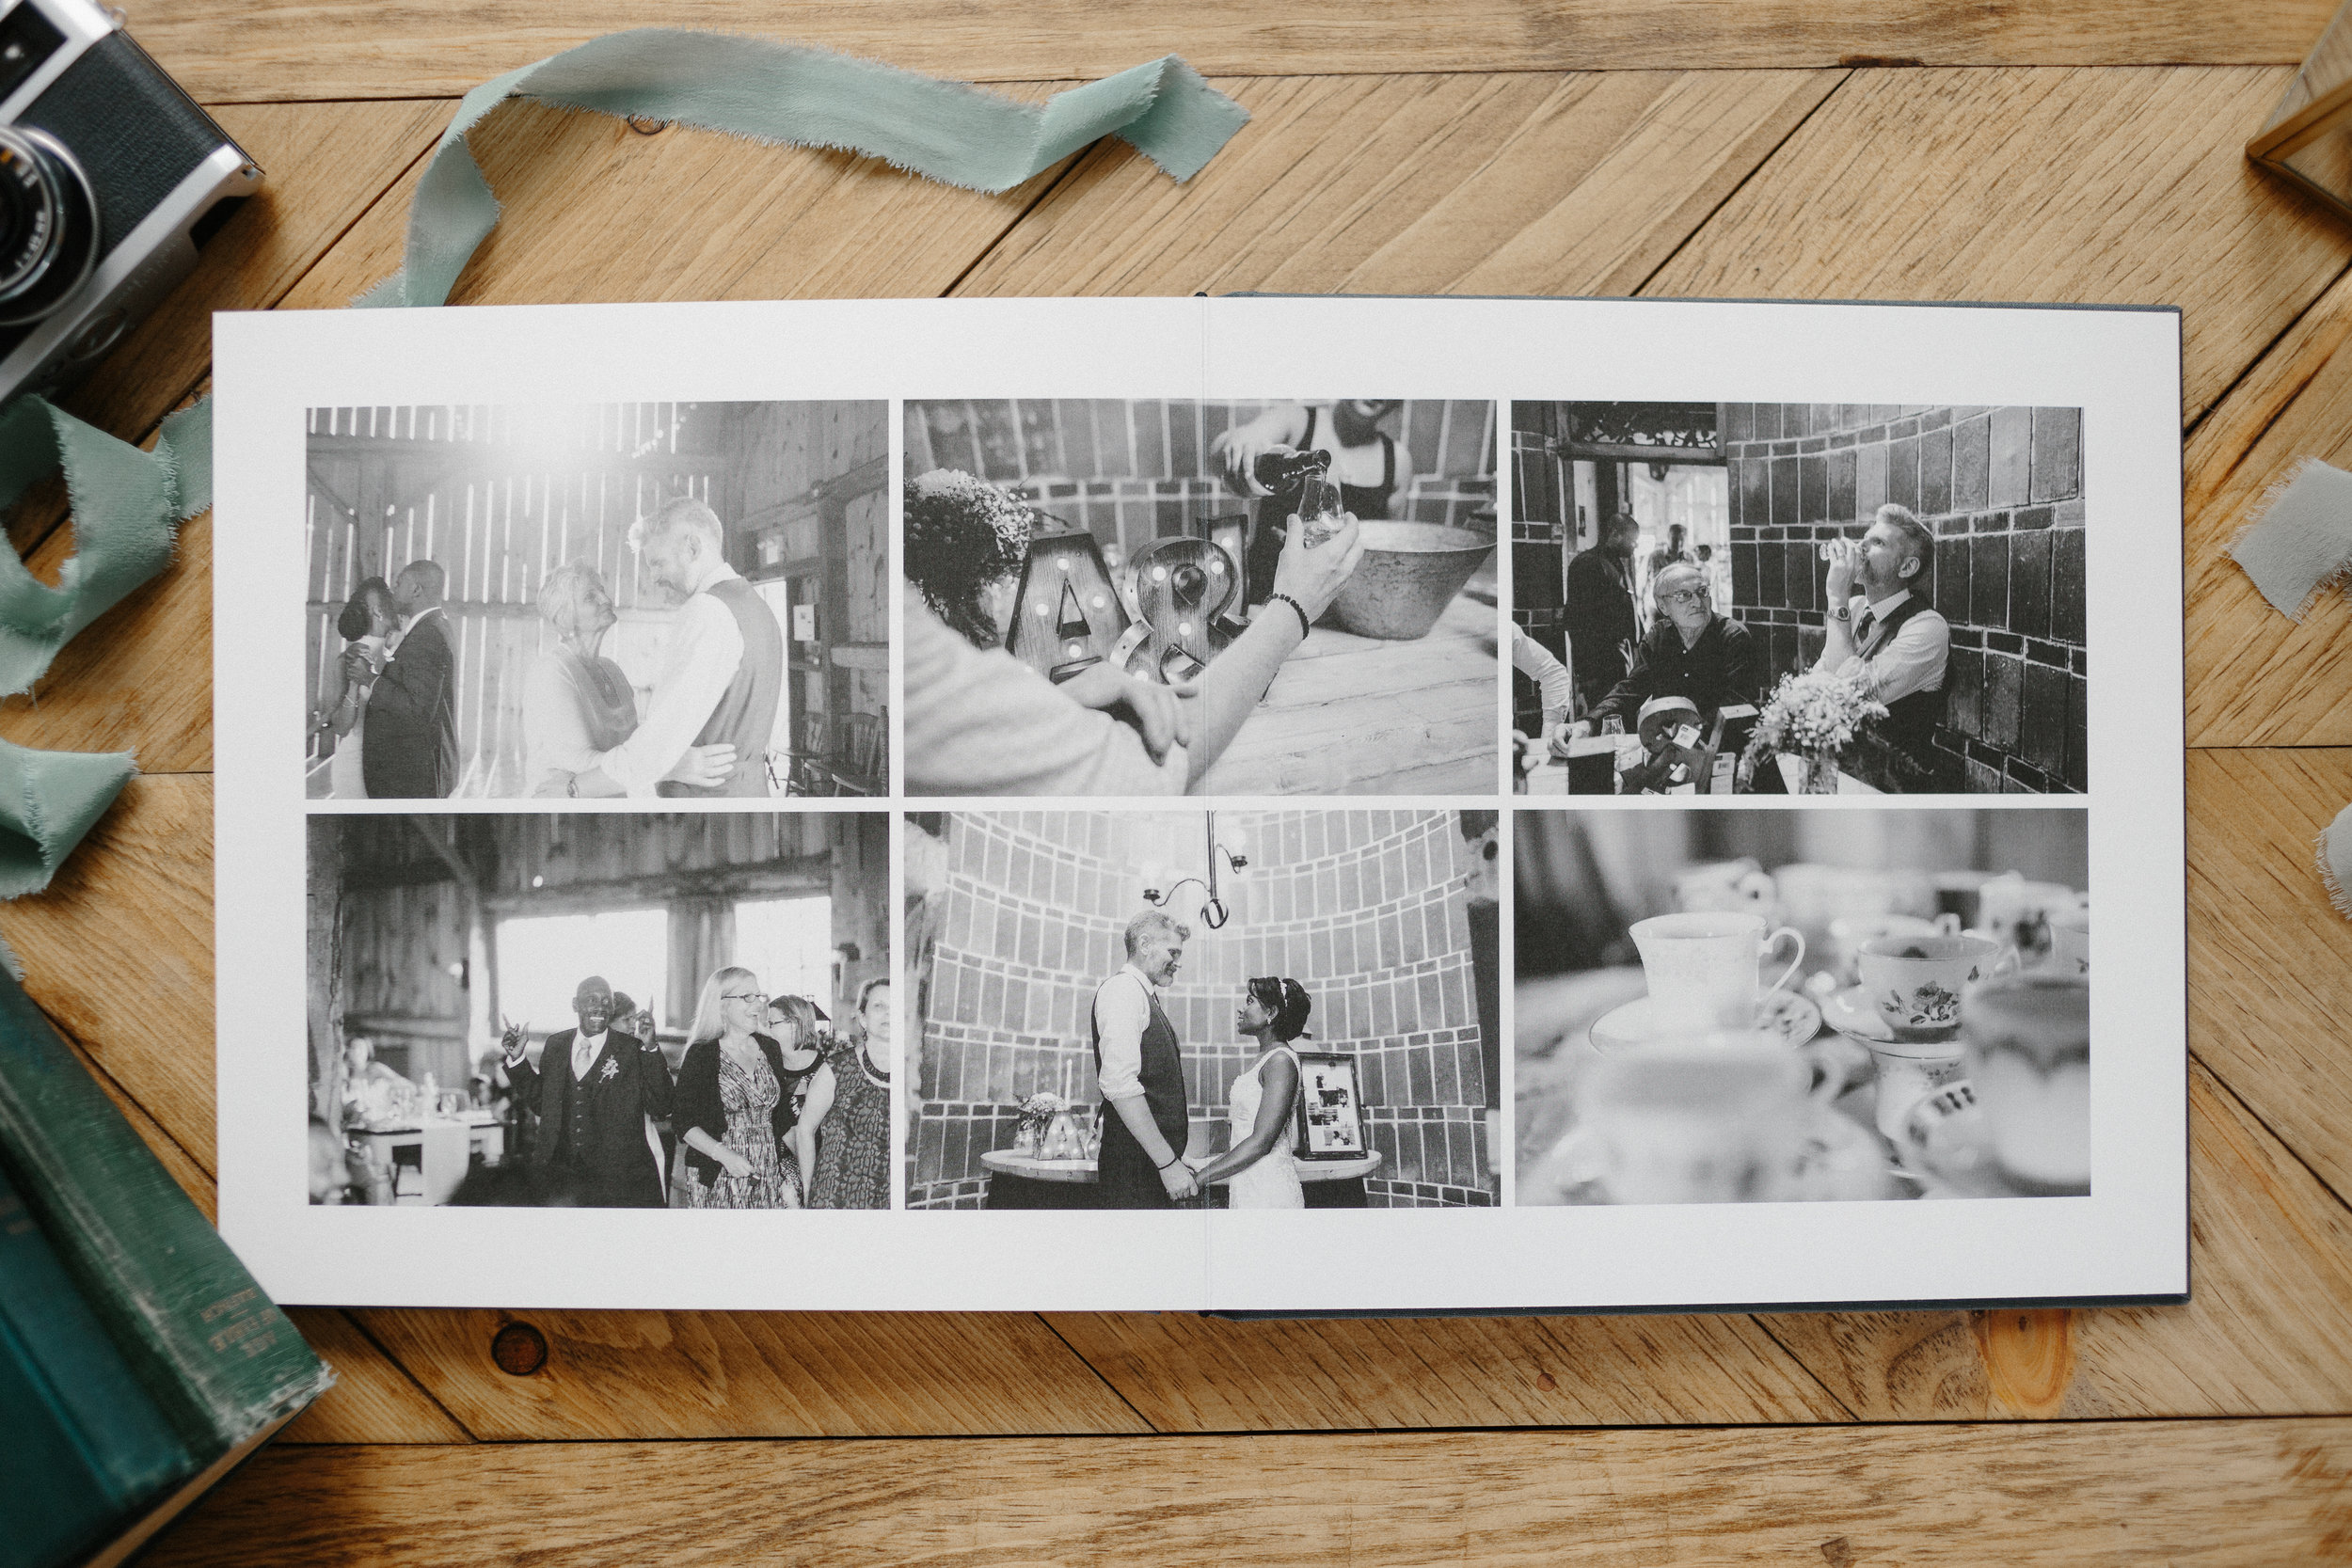 ryanne-hollies-photography-wedding-album-design-details-tono-and-co-artifact-uprising-67.jpg